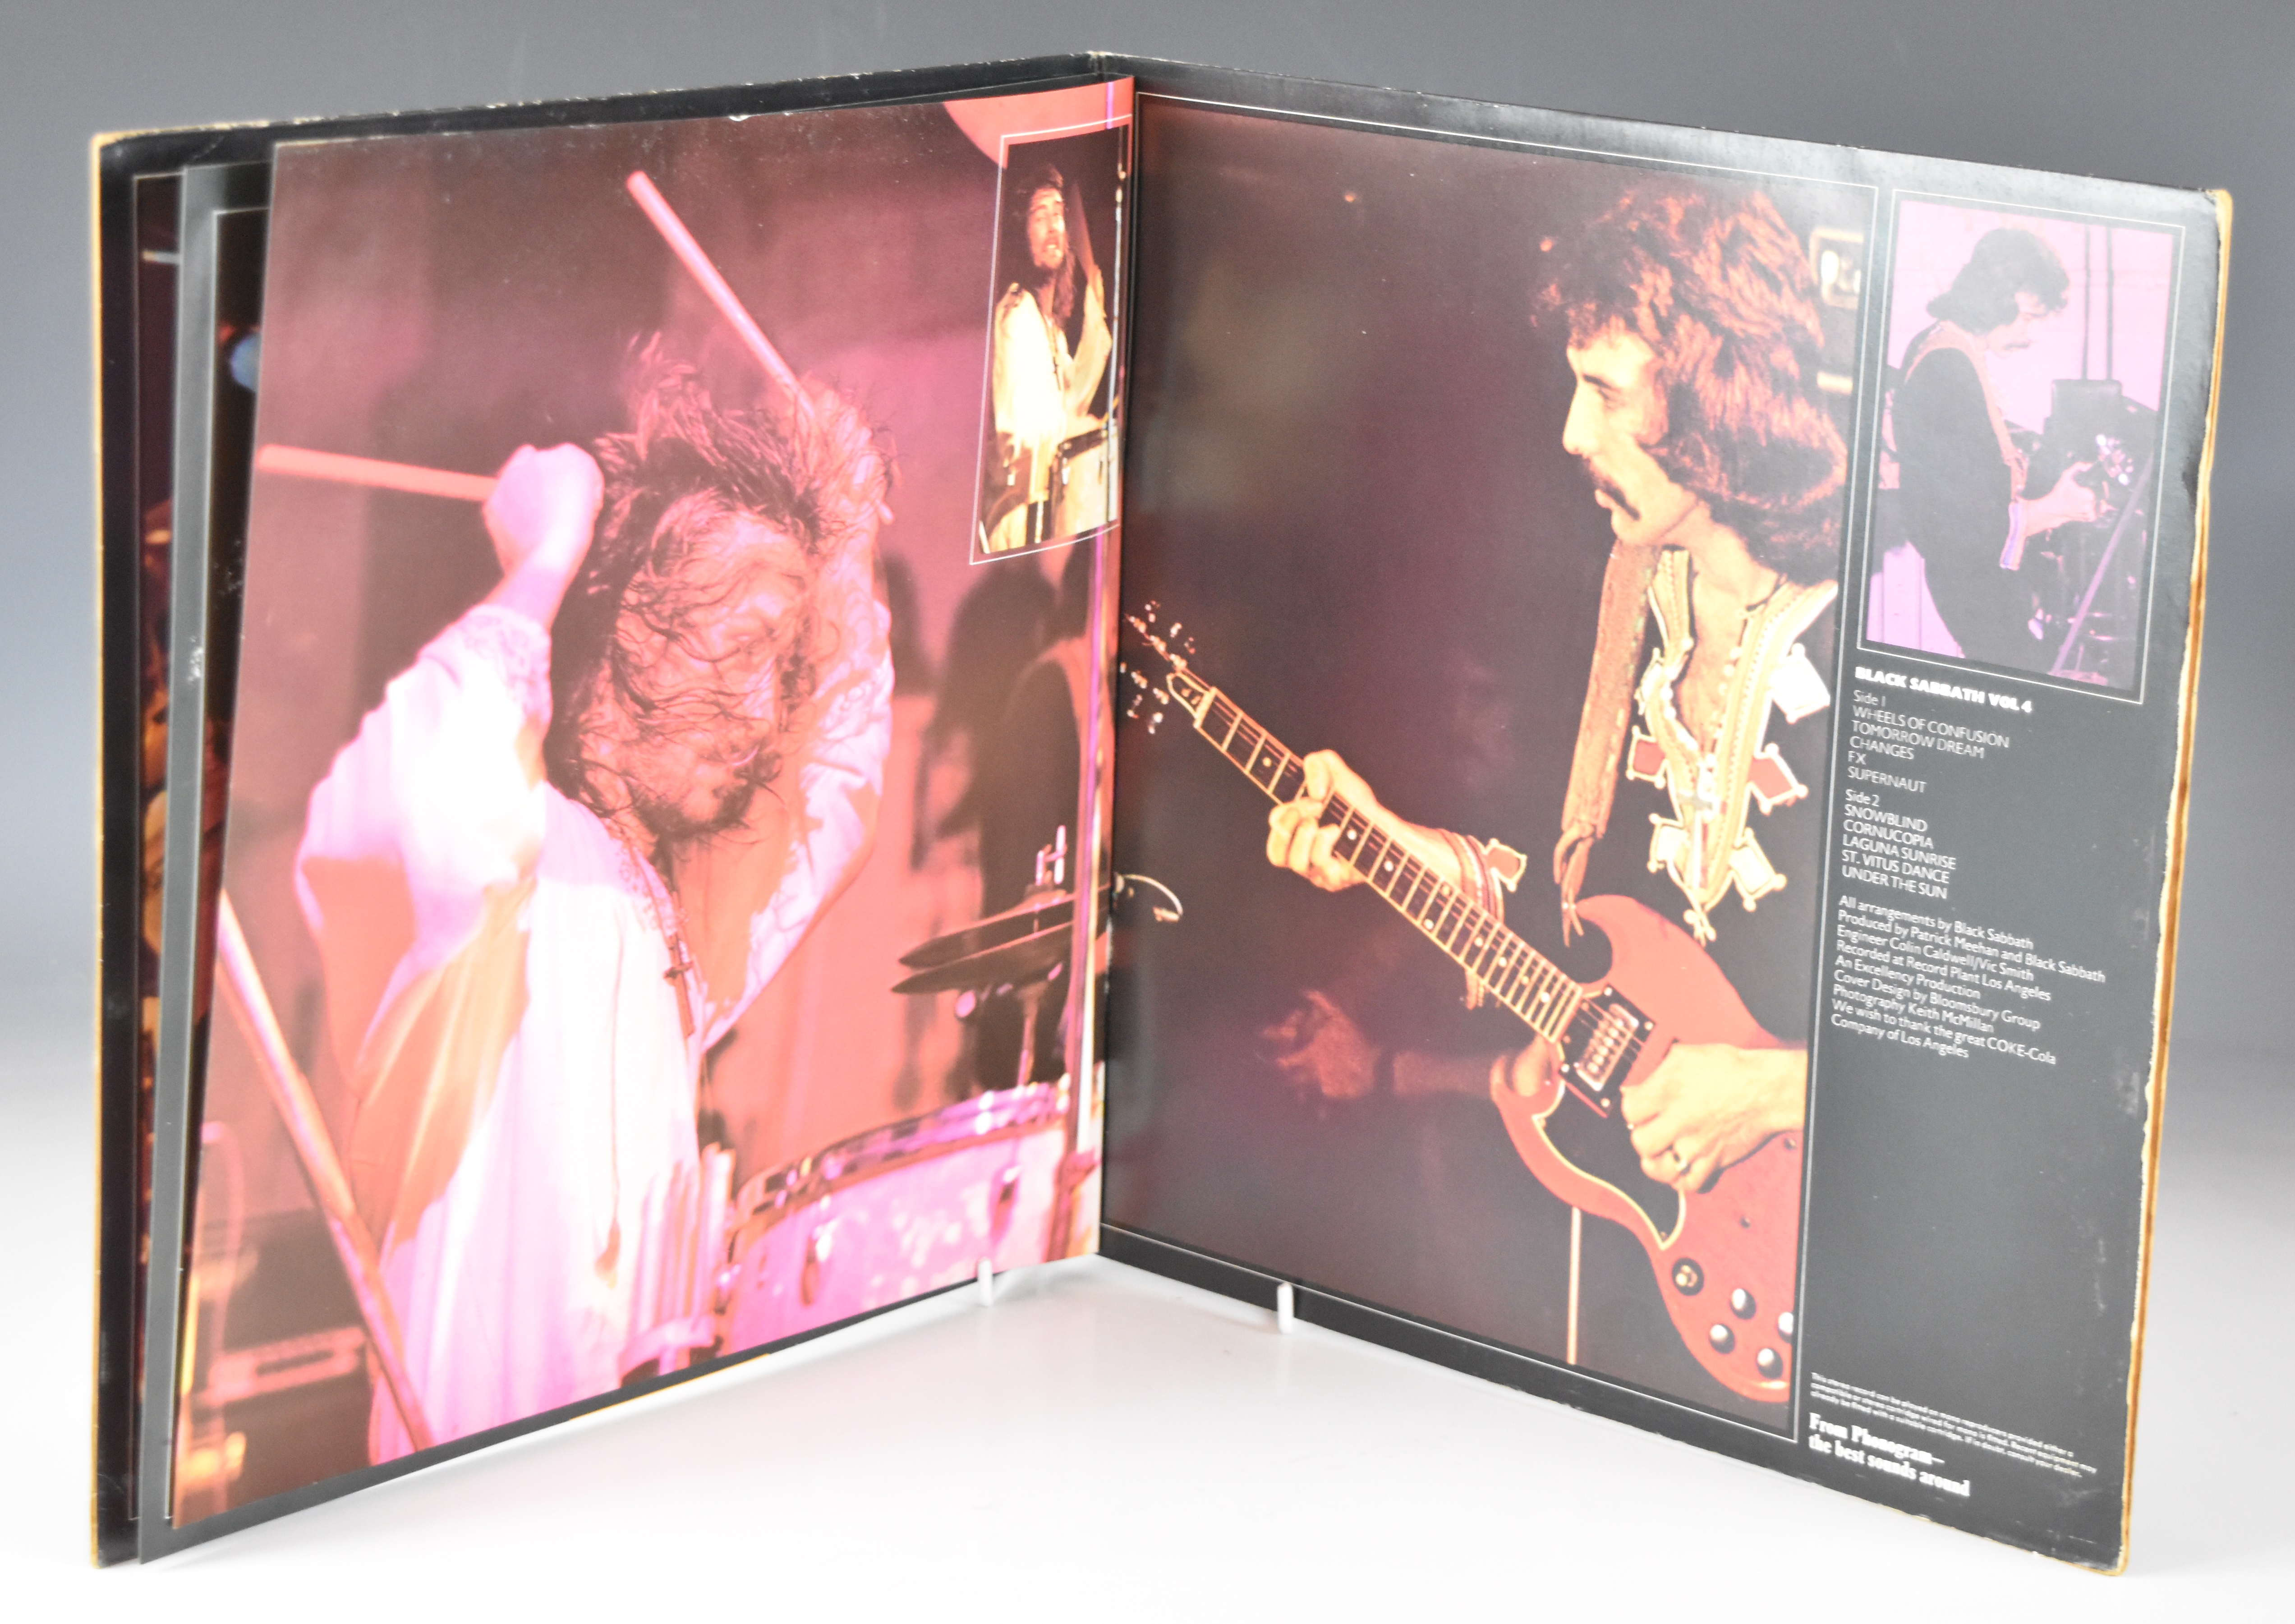 Black Sabbath - Volume 4 (6360-071) Vertigo Dutch pressing with black and white swirls, record - Image 3 of 4